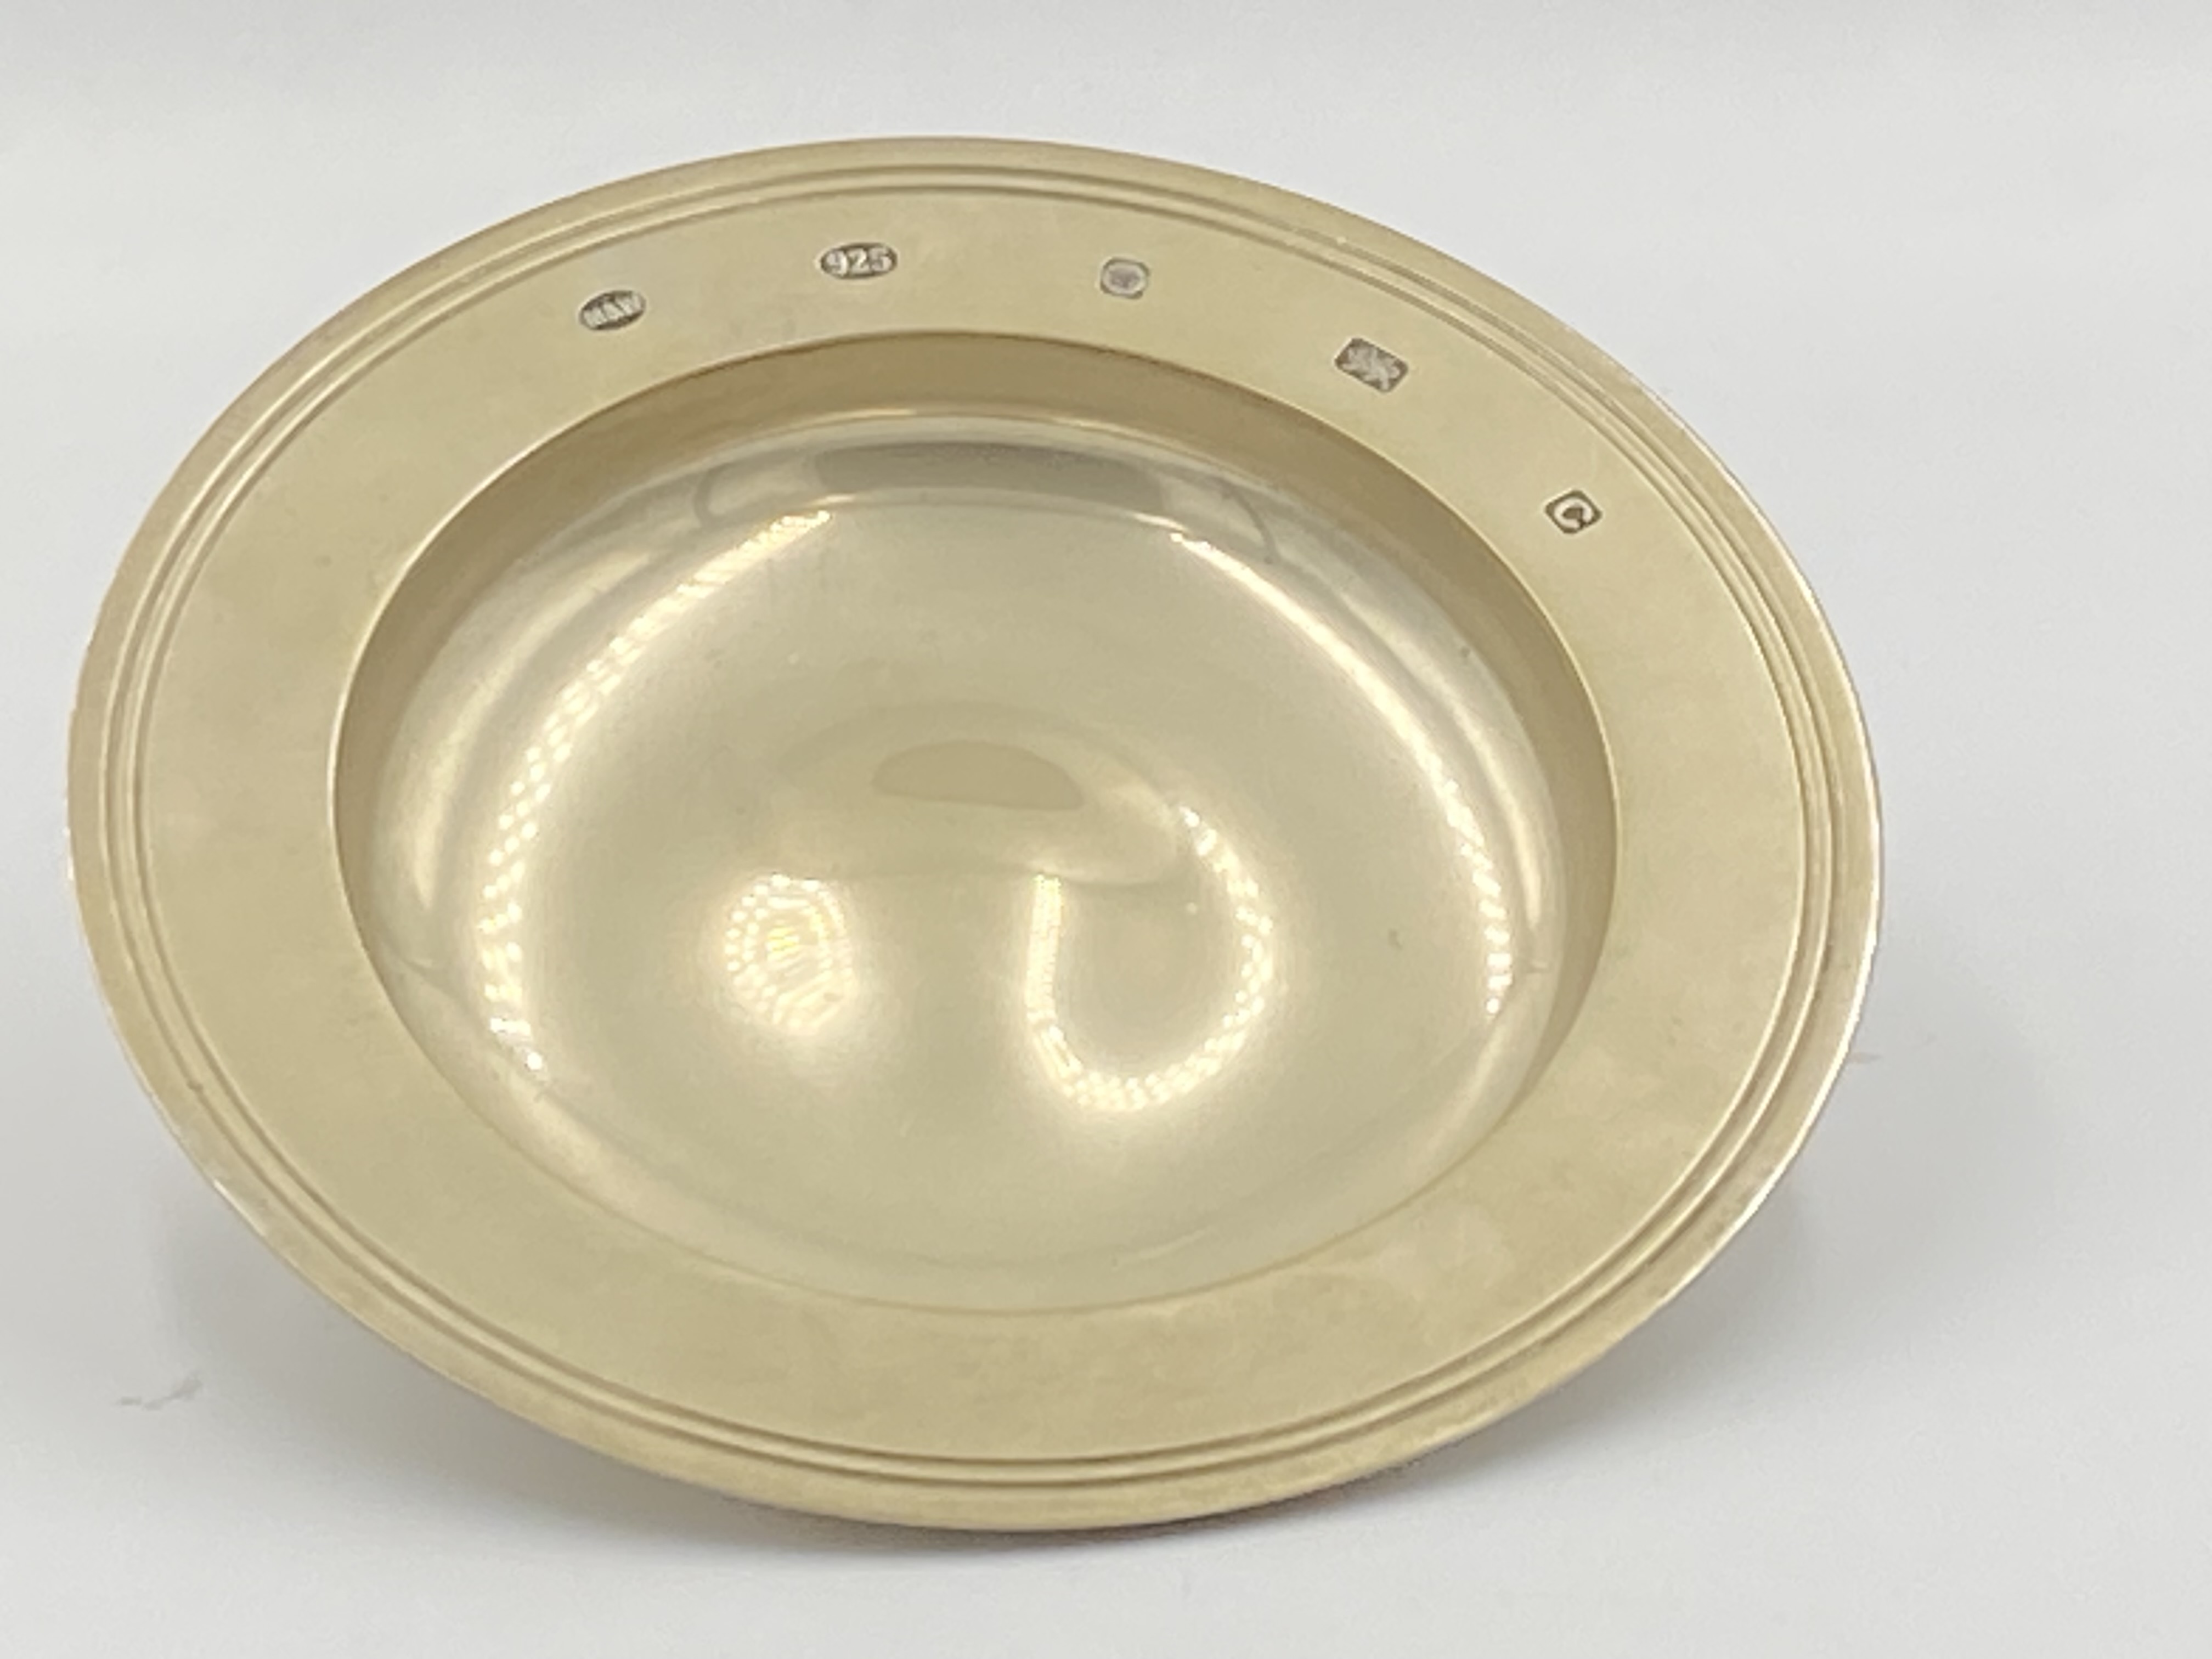 A Mappin & Webb silver bowl